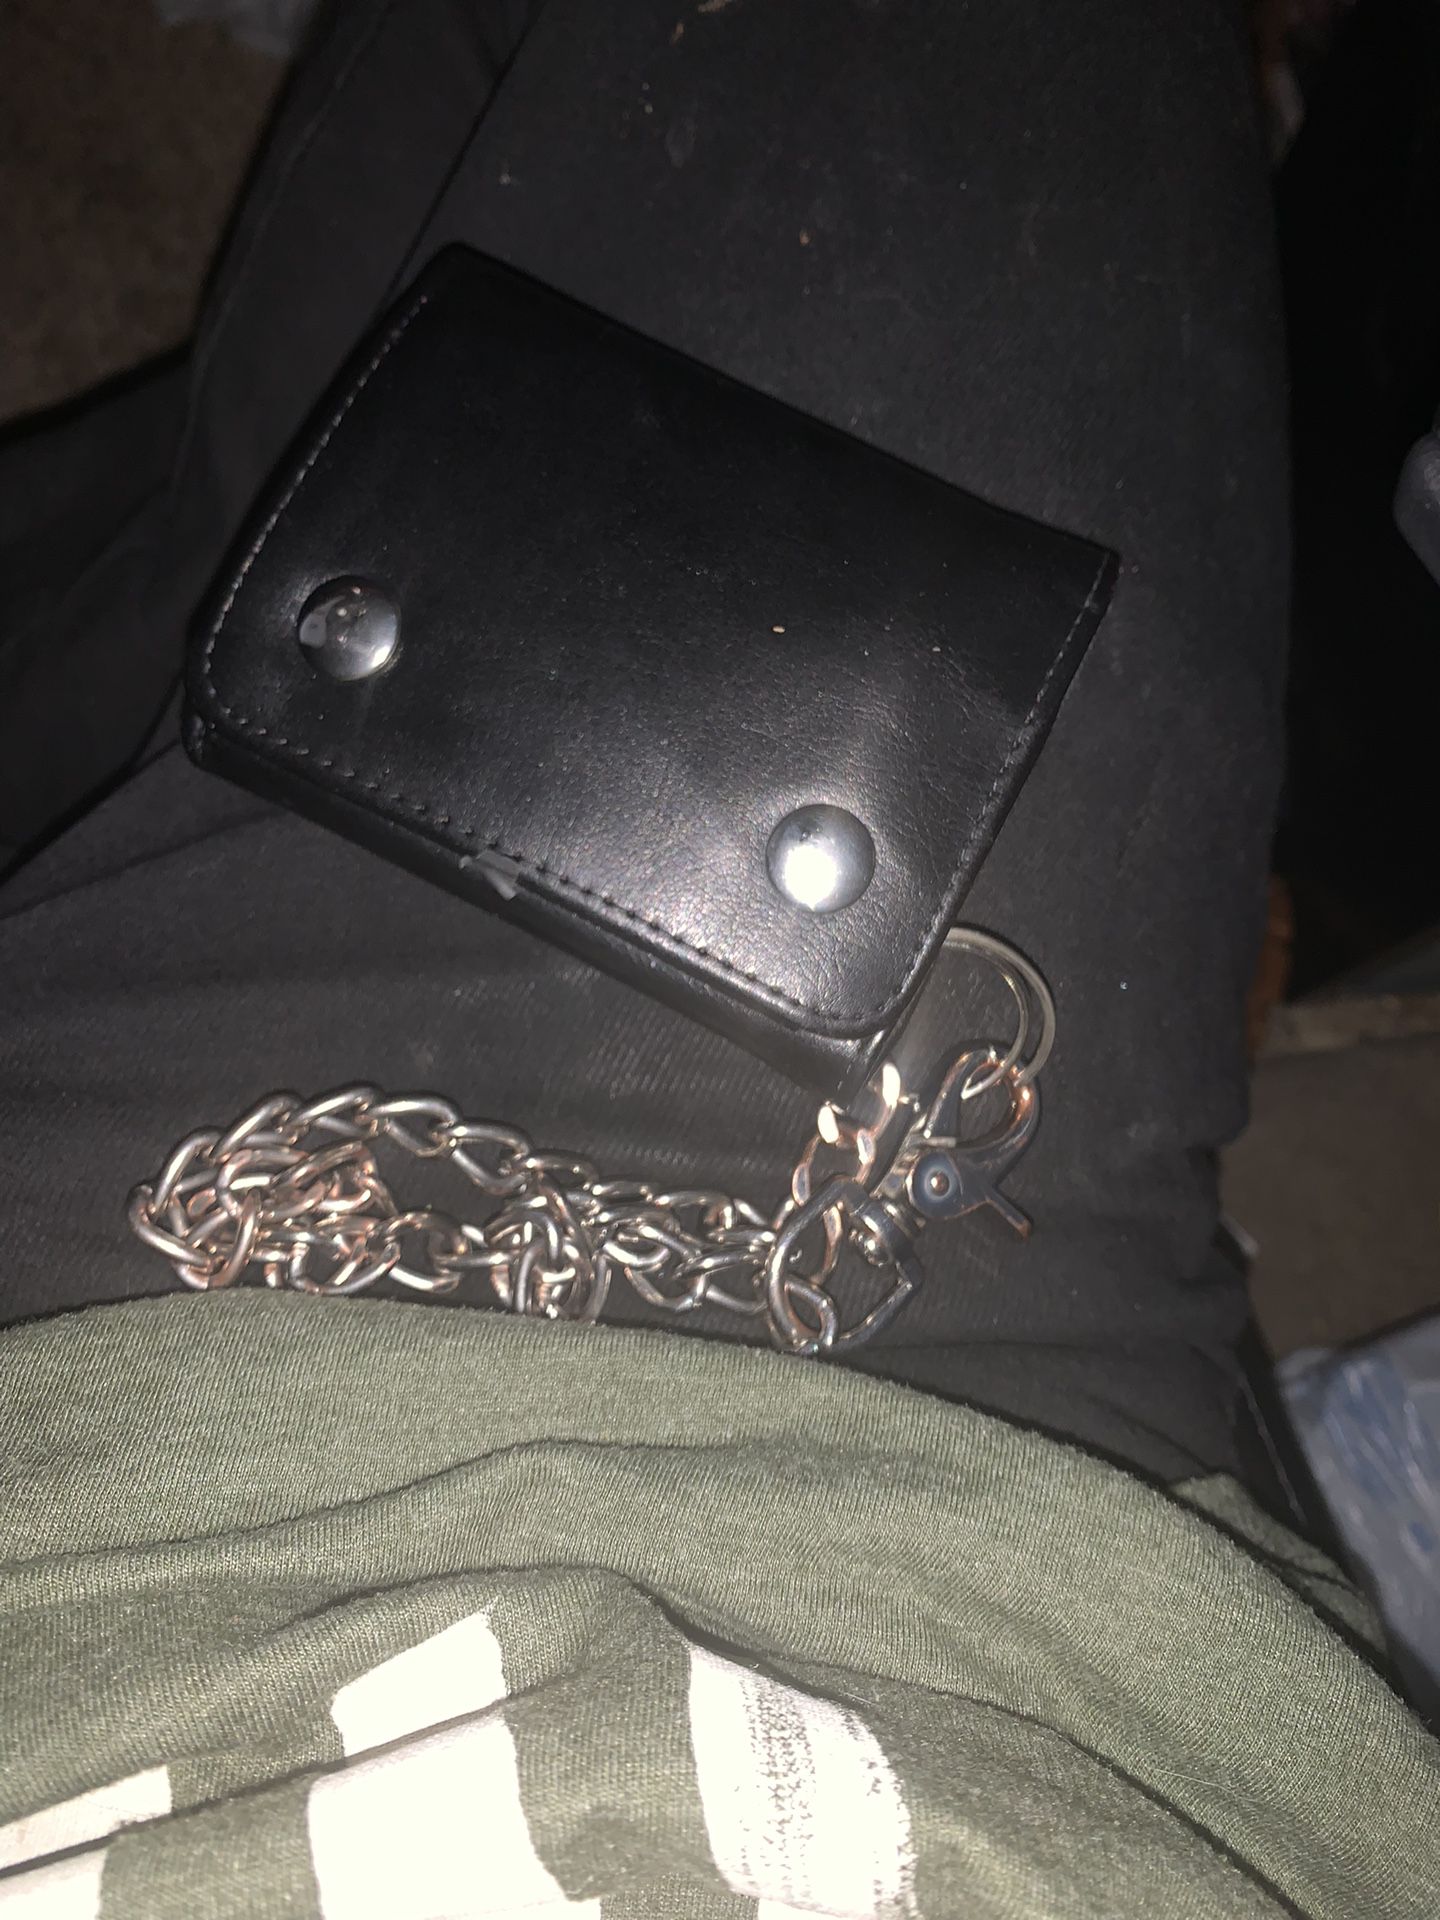 Chain Wallet